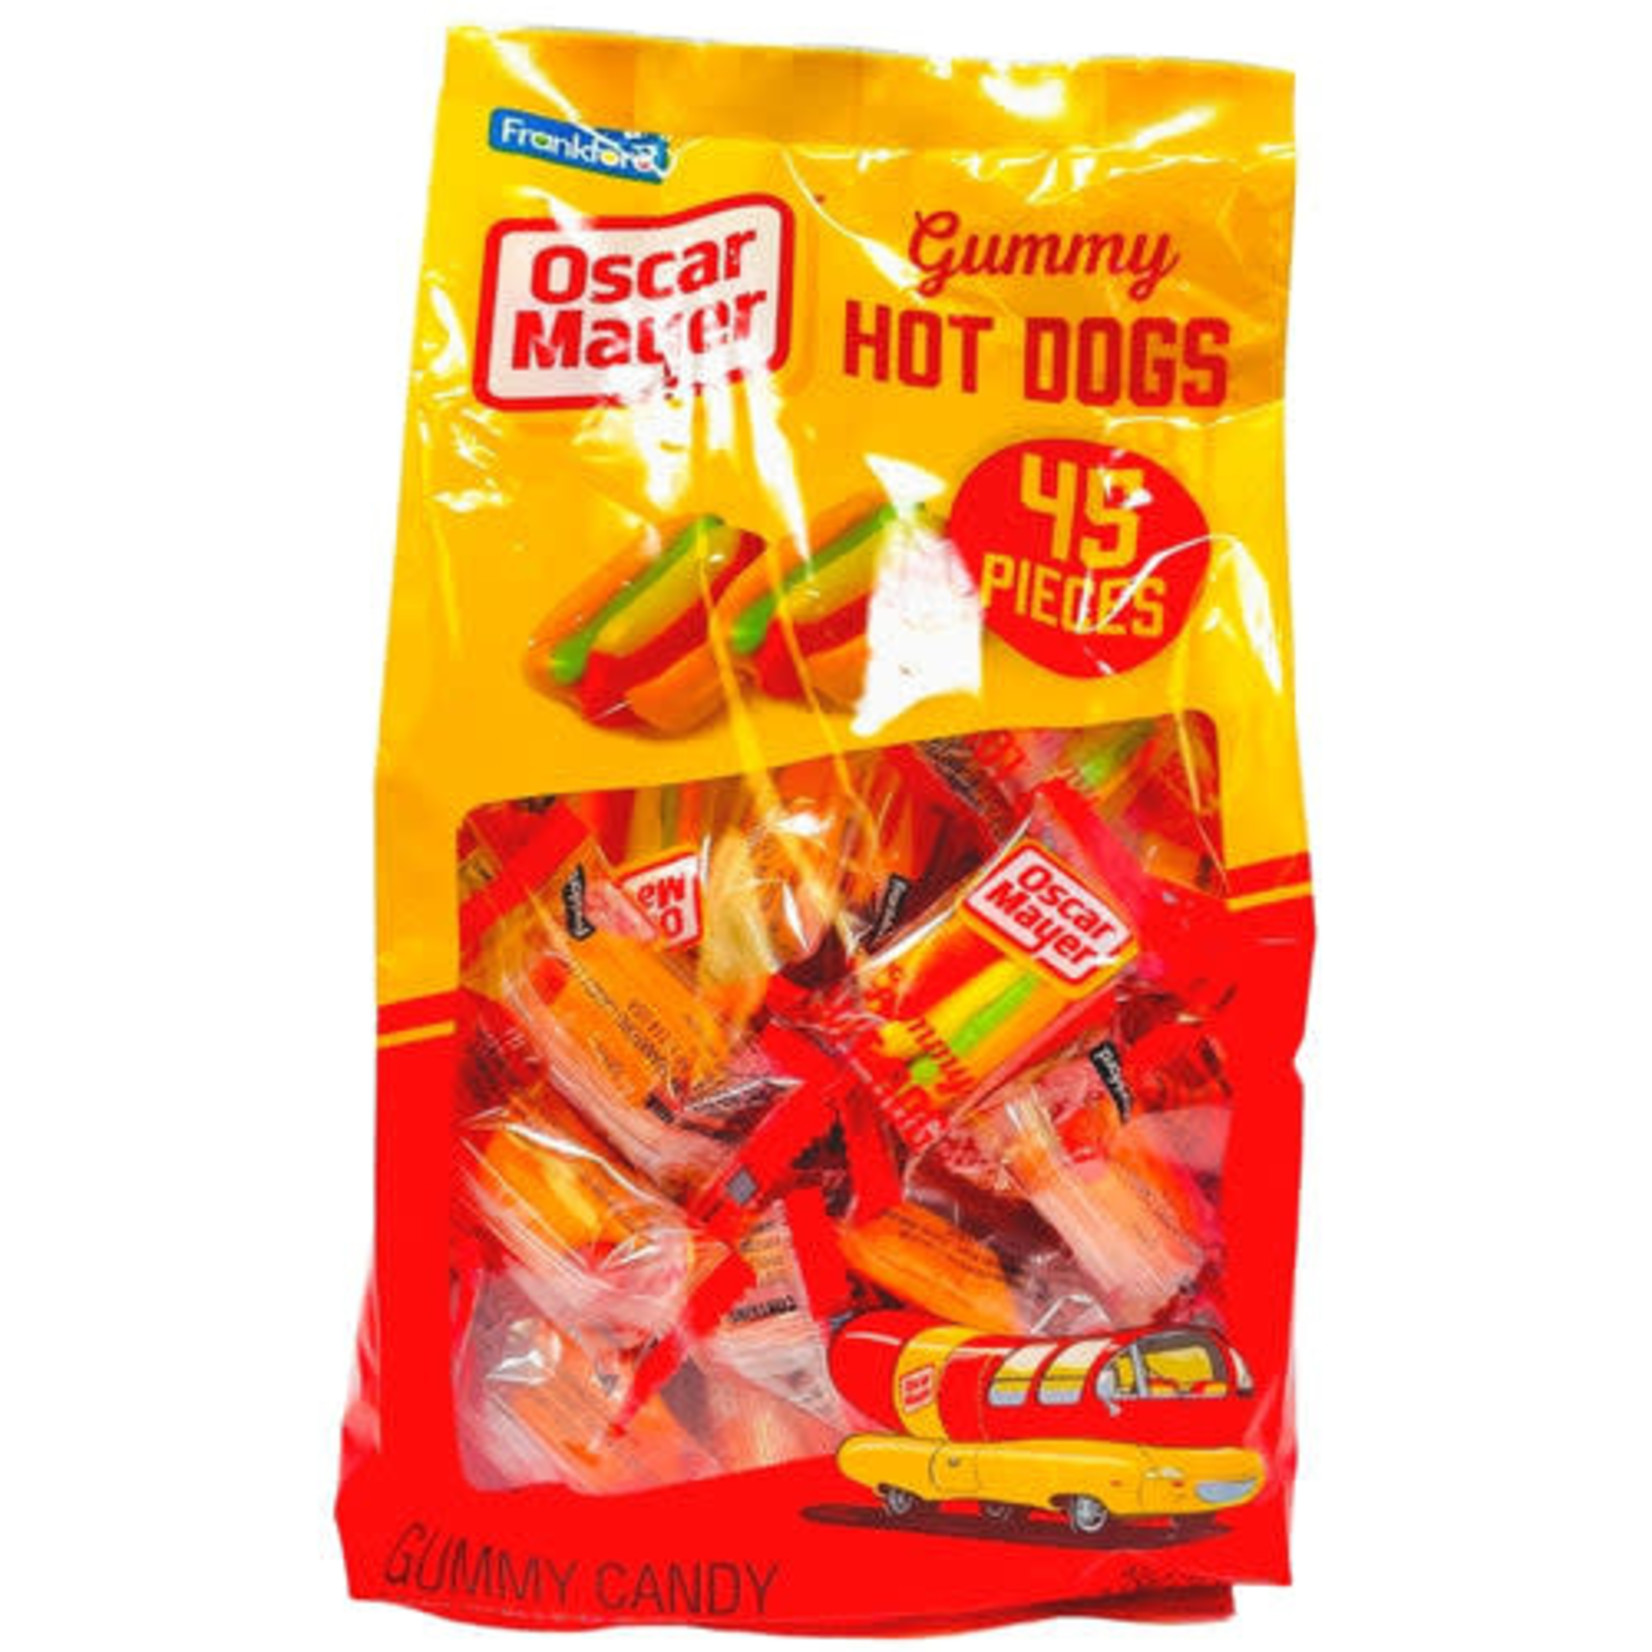 Oscar Mayer Gummy Hot Dogs